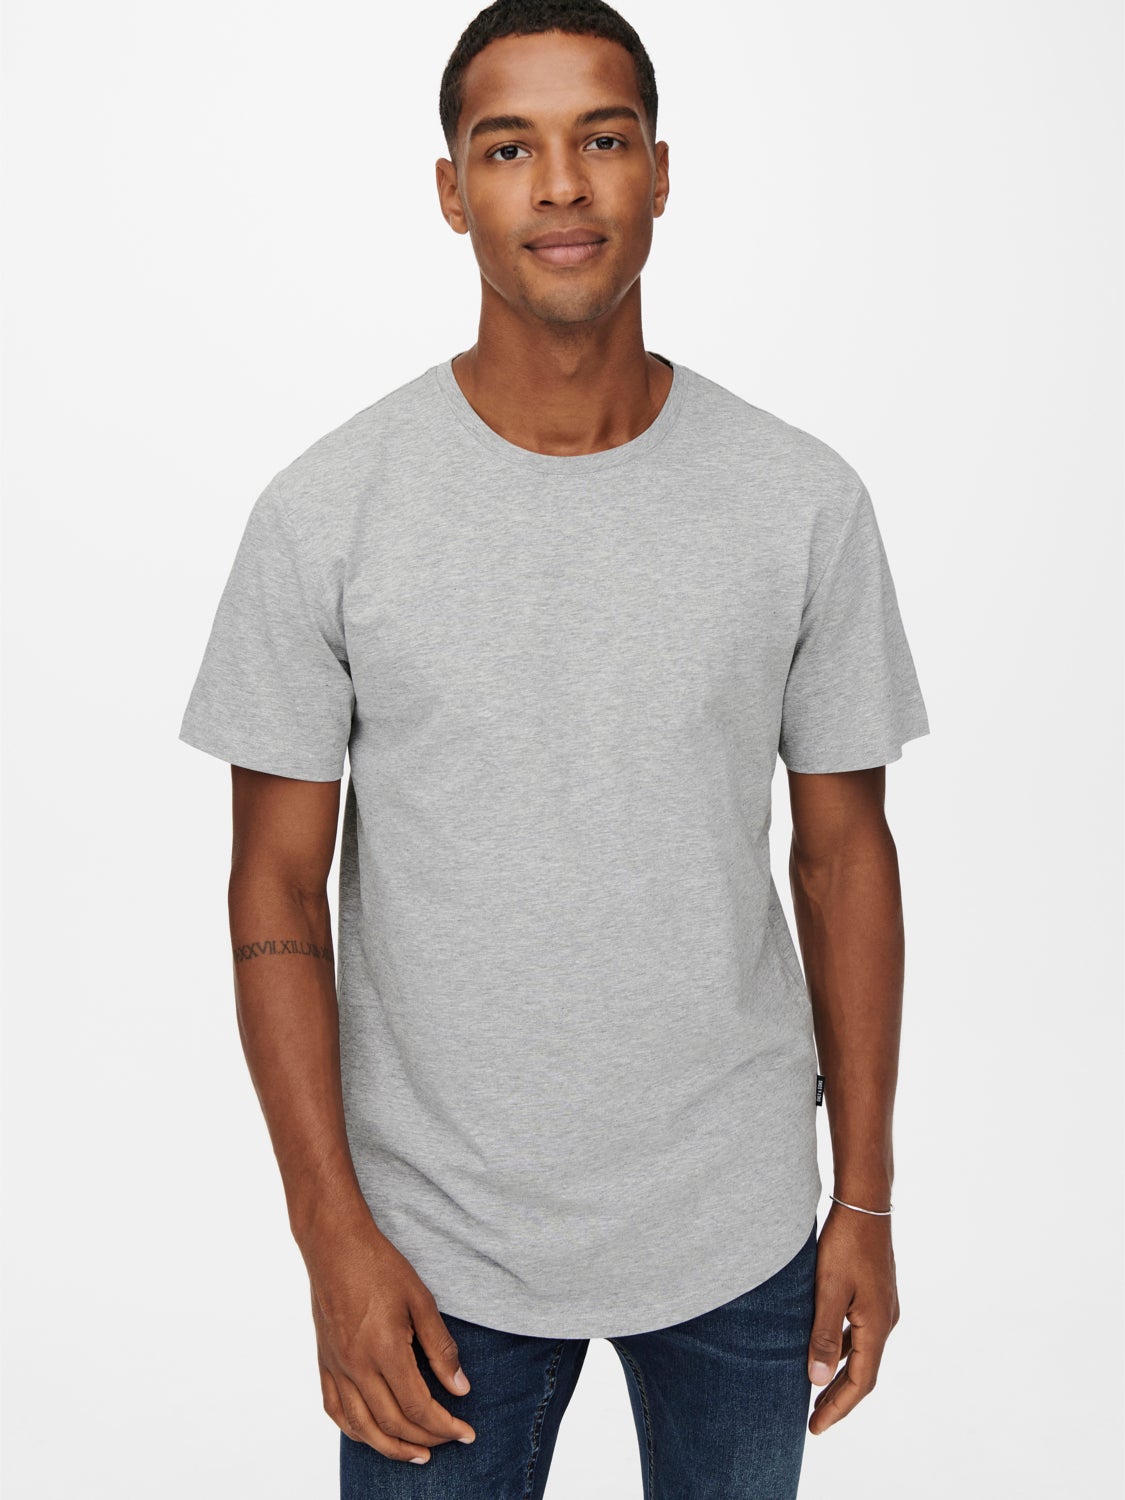 advies Uitgebreid jazz 7-pack o-neck t-shirt | White | ONLY & SONS®